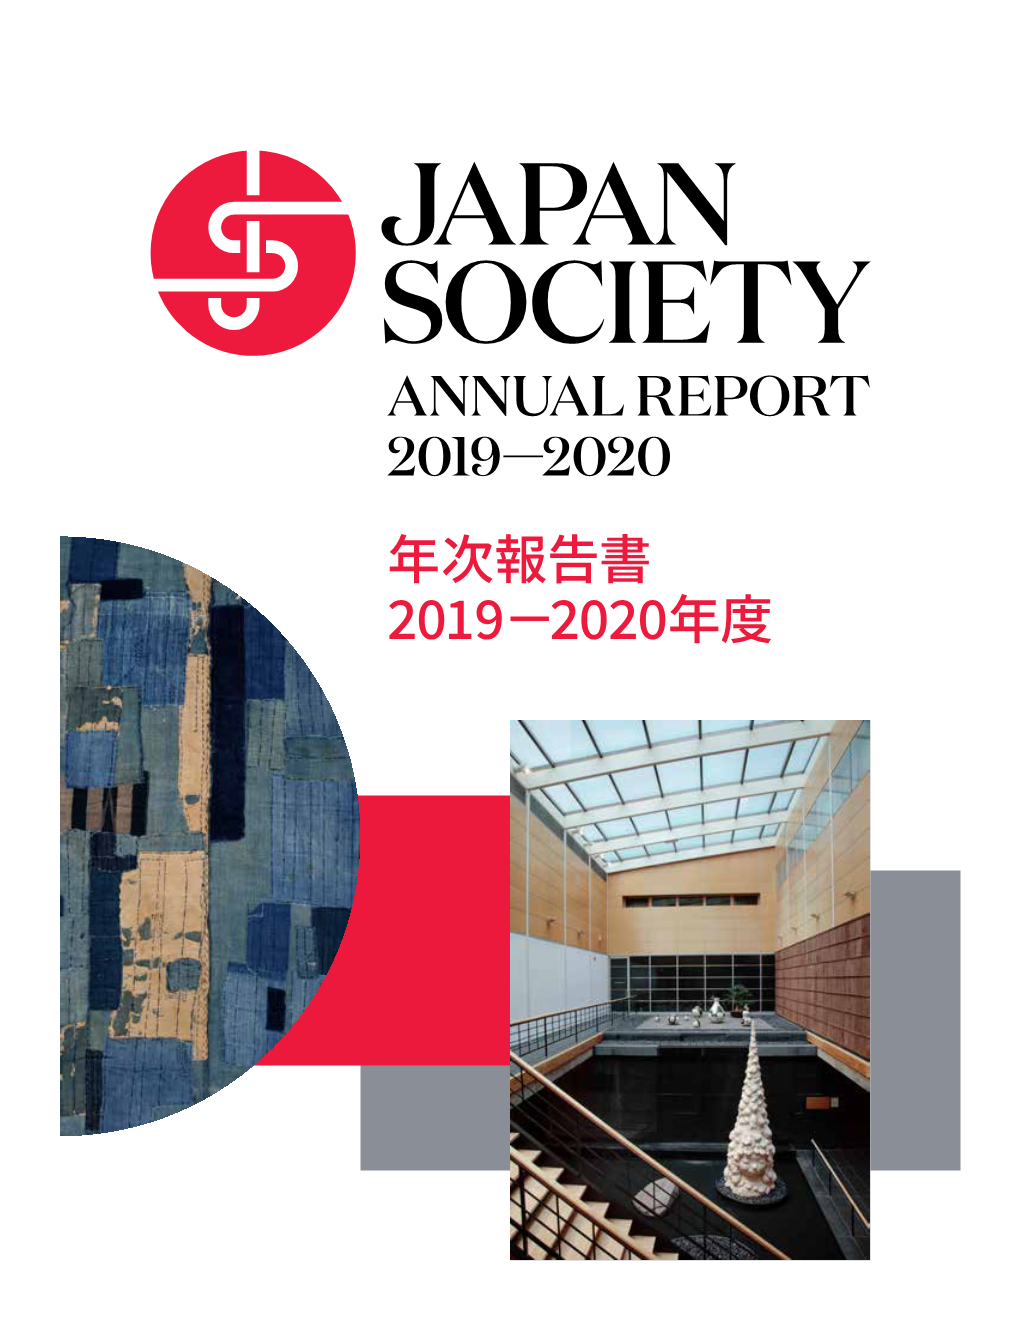 Annual Report 2019—2020